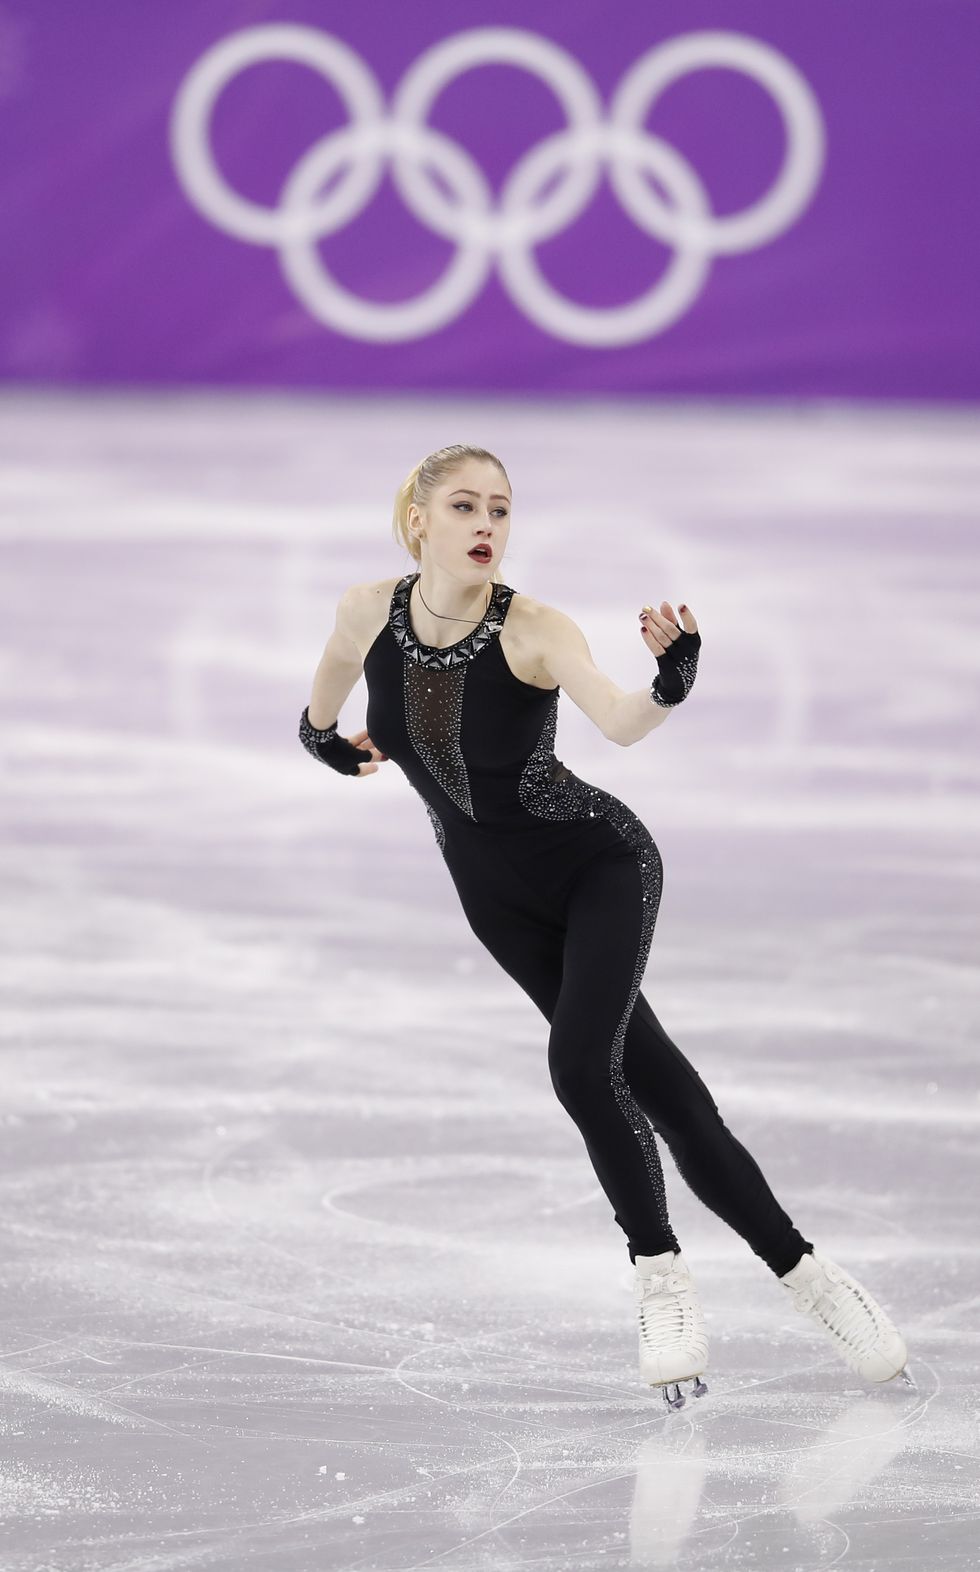 Figure skate, Sports, Skating, Ice skating, Figure skating, Ice dancing, Ice skate, Recreation, Axel jump, Jumping, 